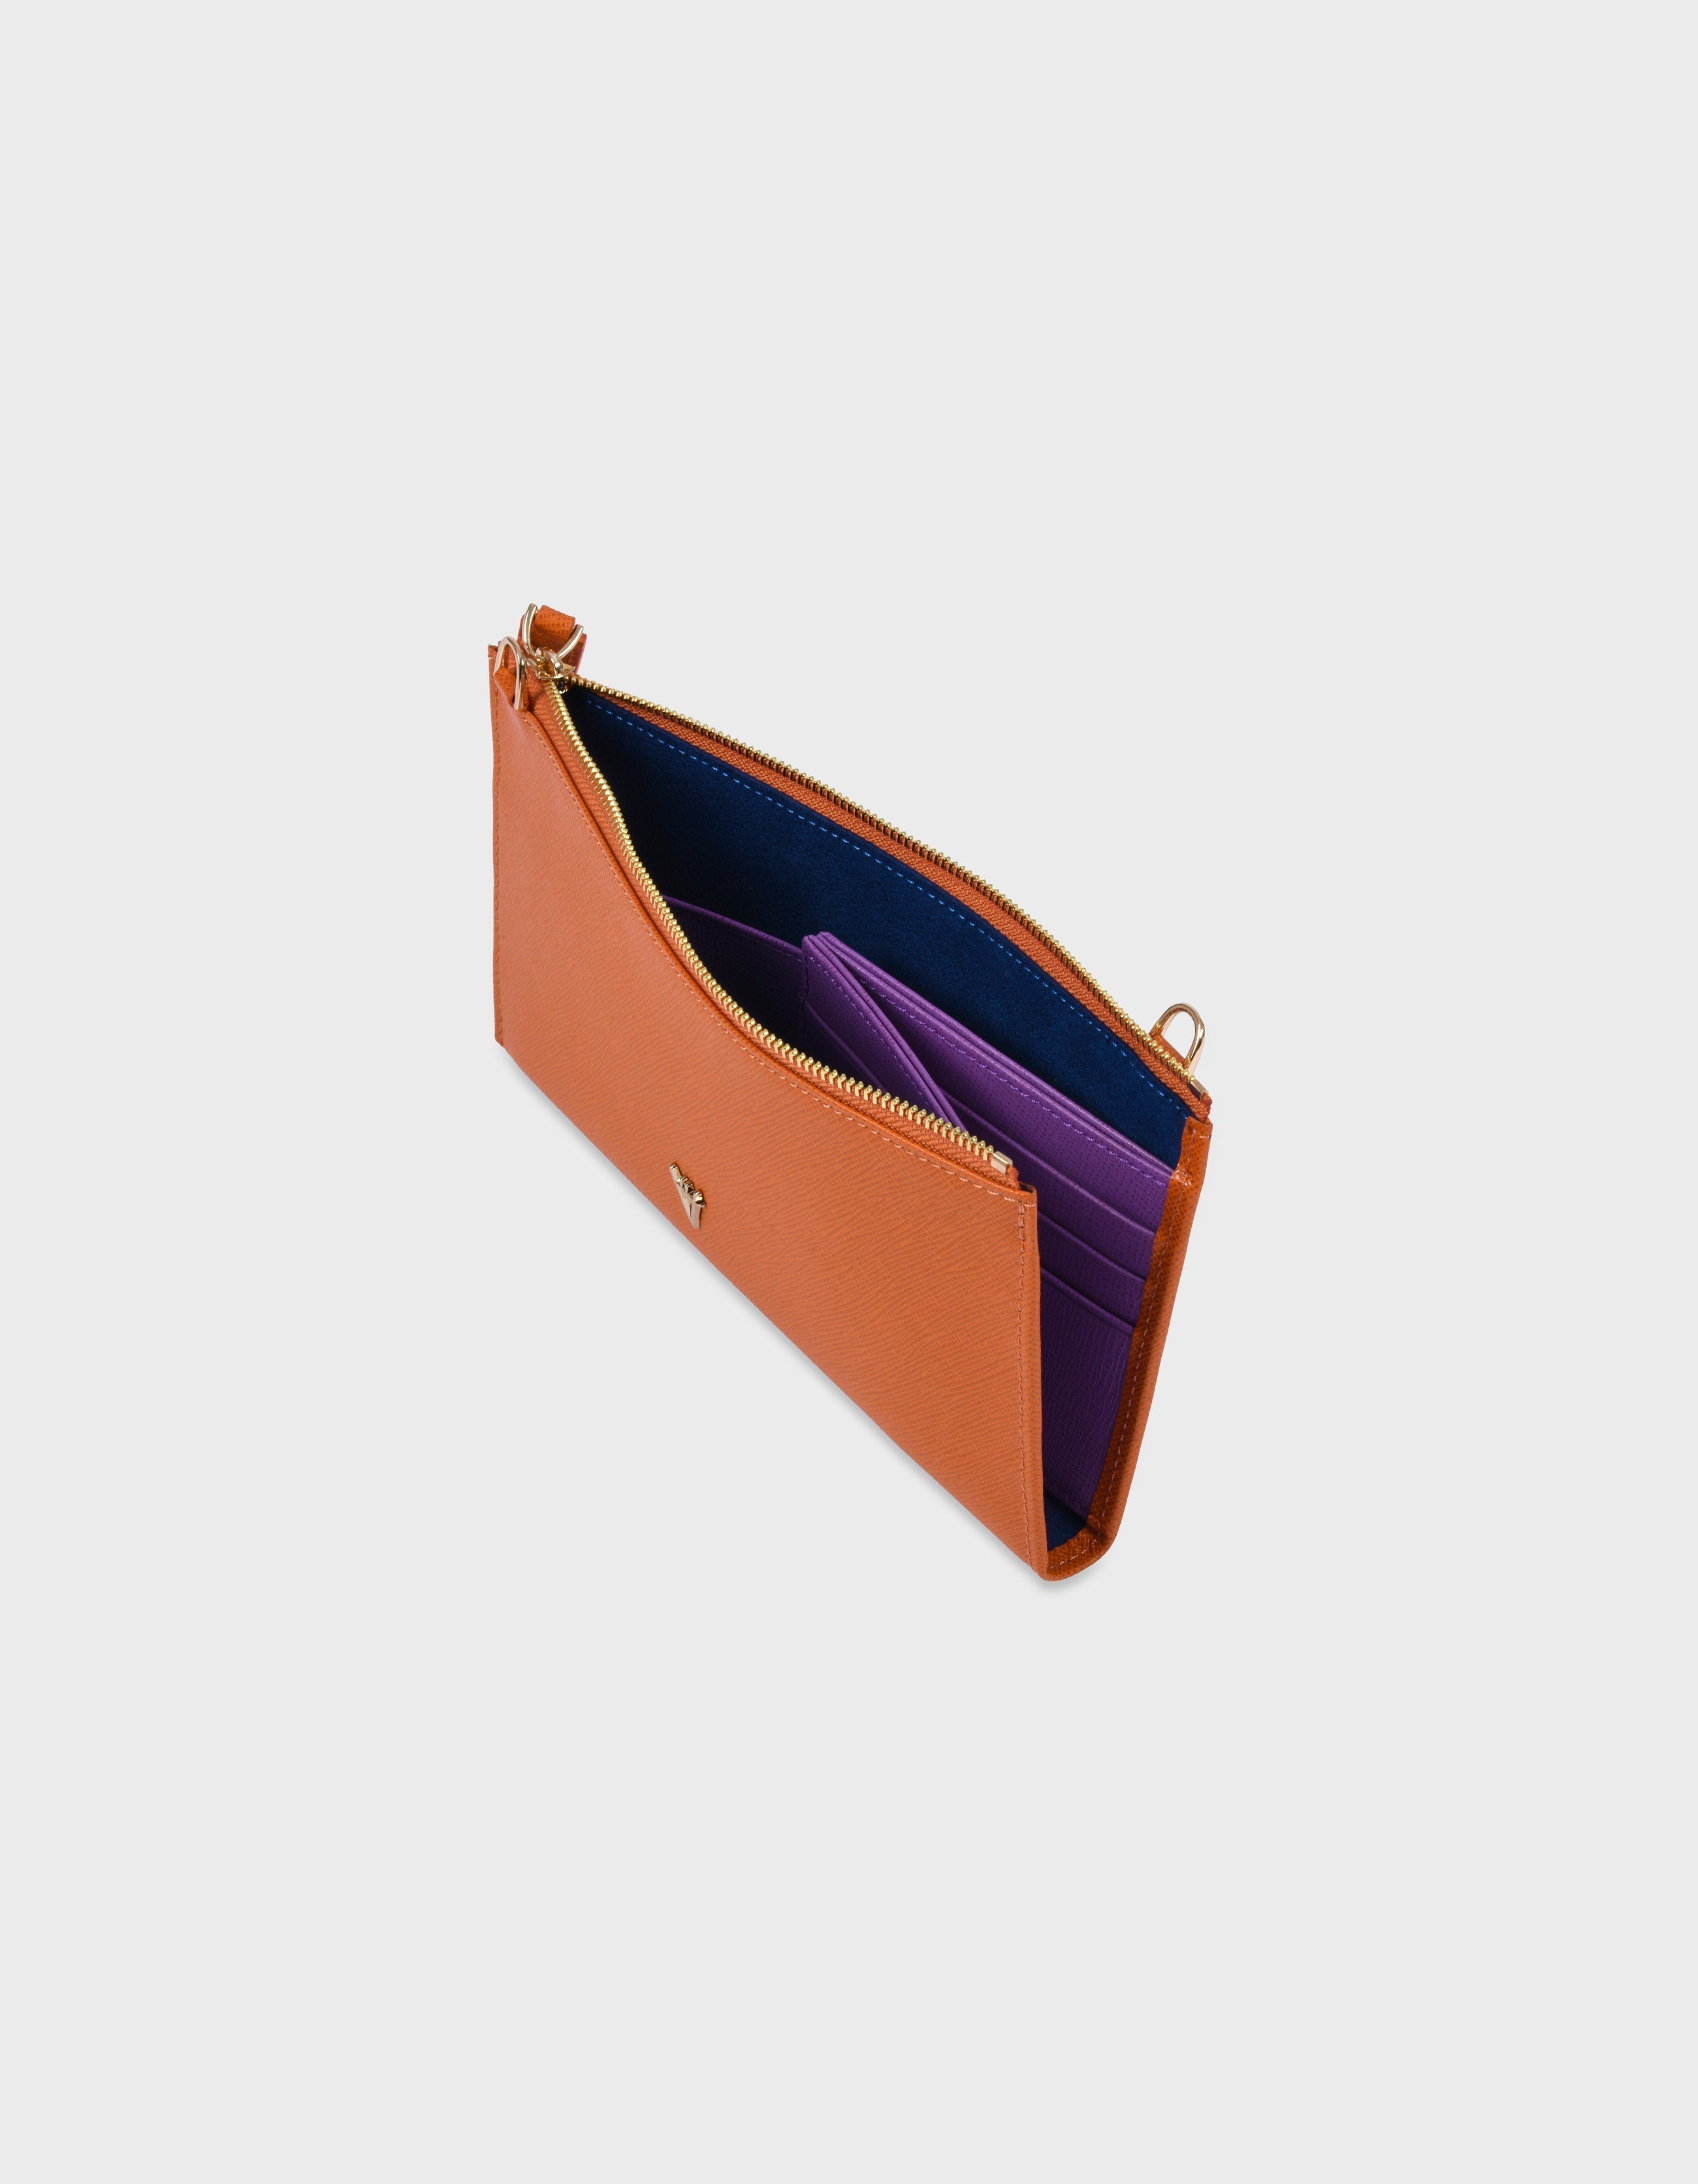 HiVa Atelier | Omnia Chain Bag & Clutch Orange | Beautiful and Versatile